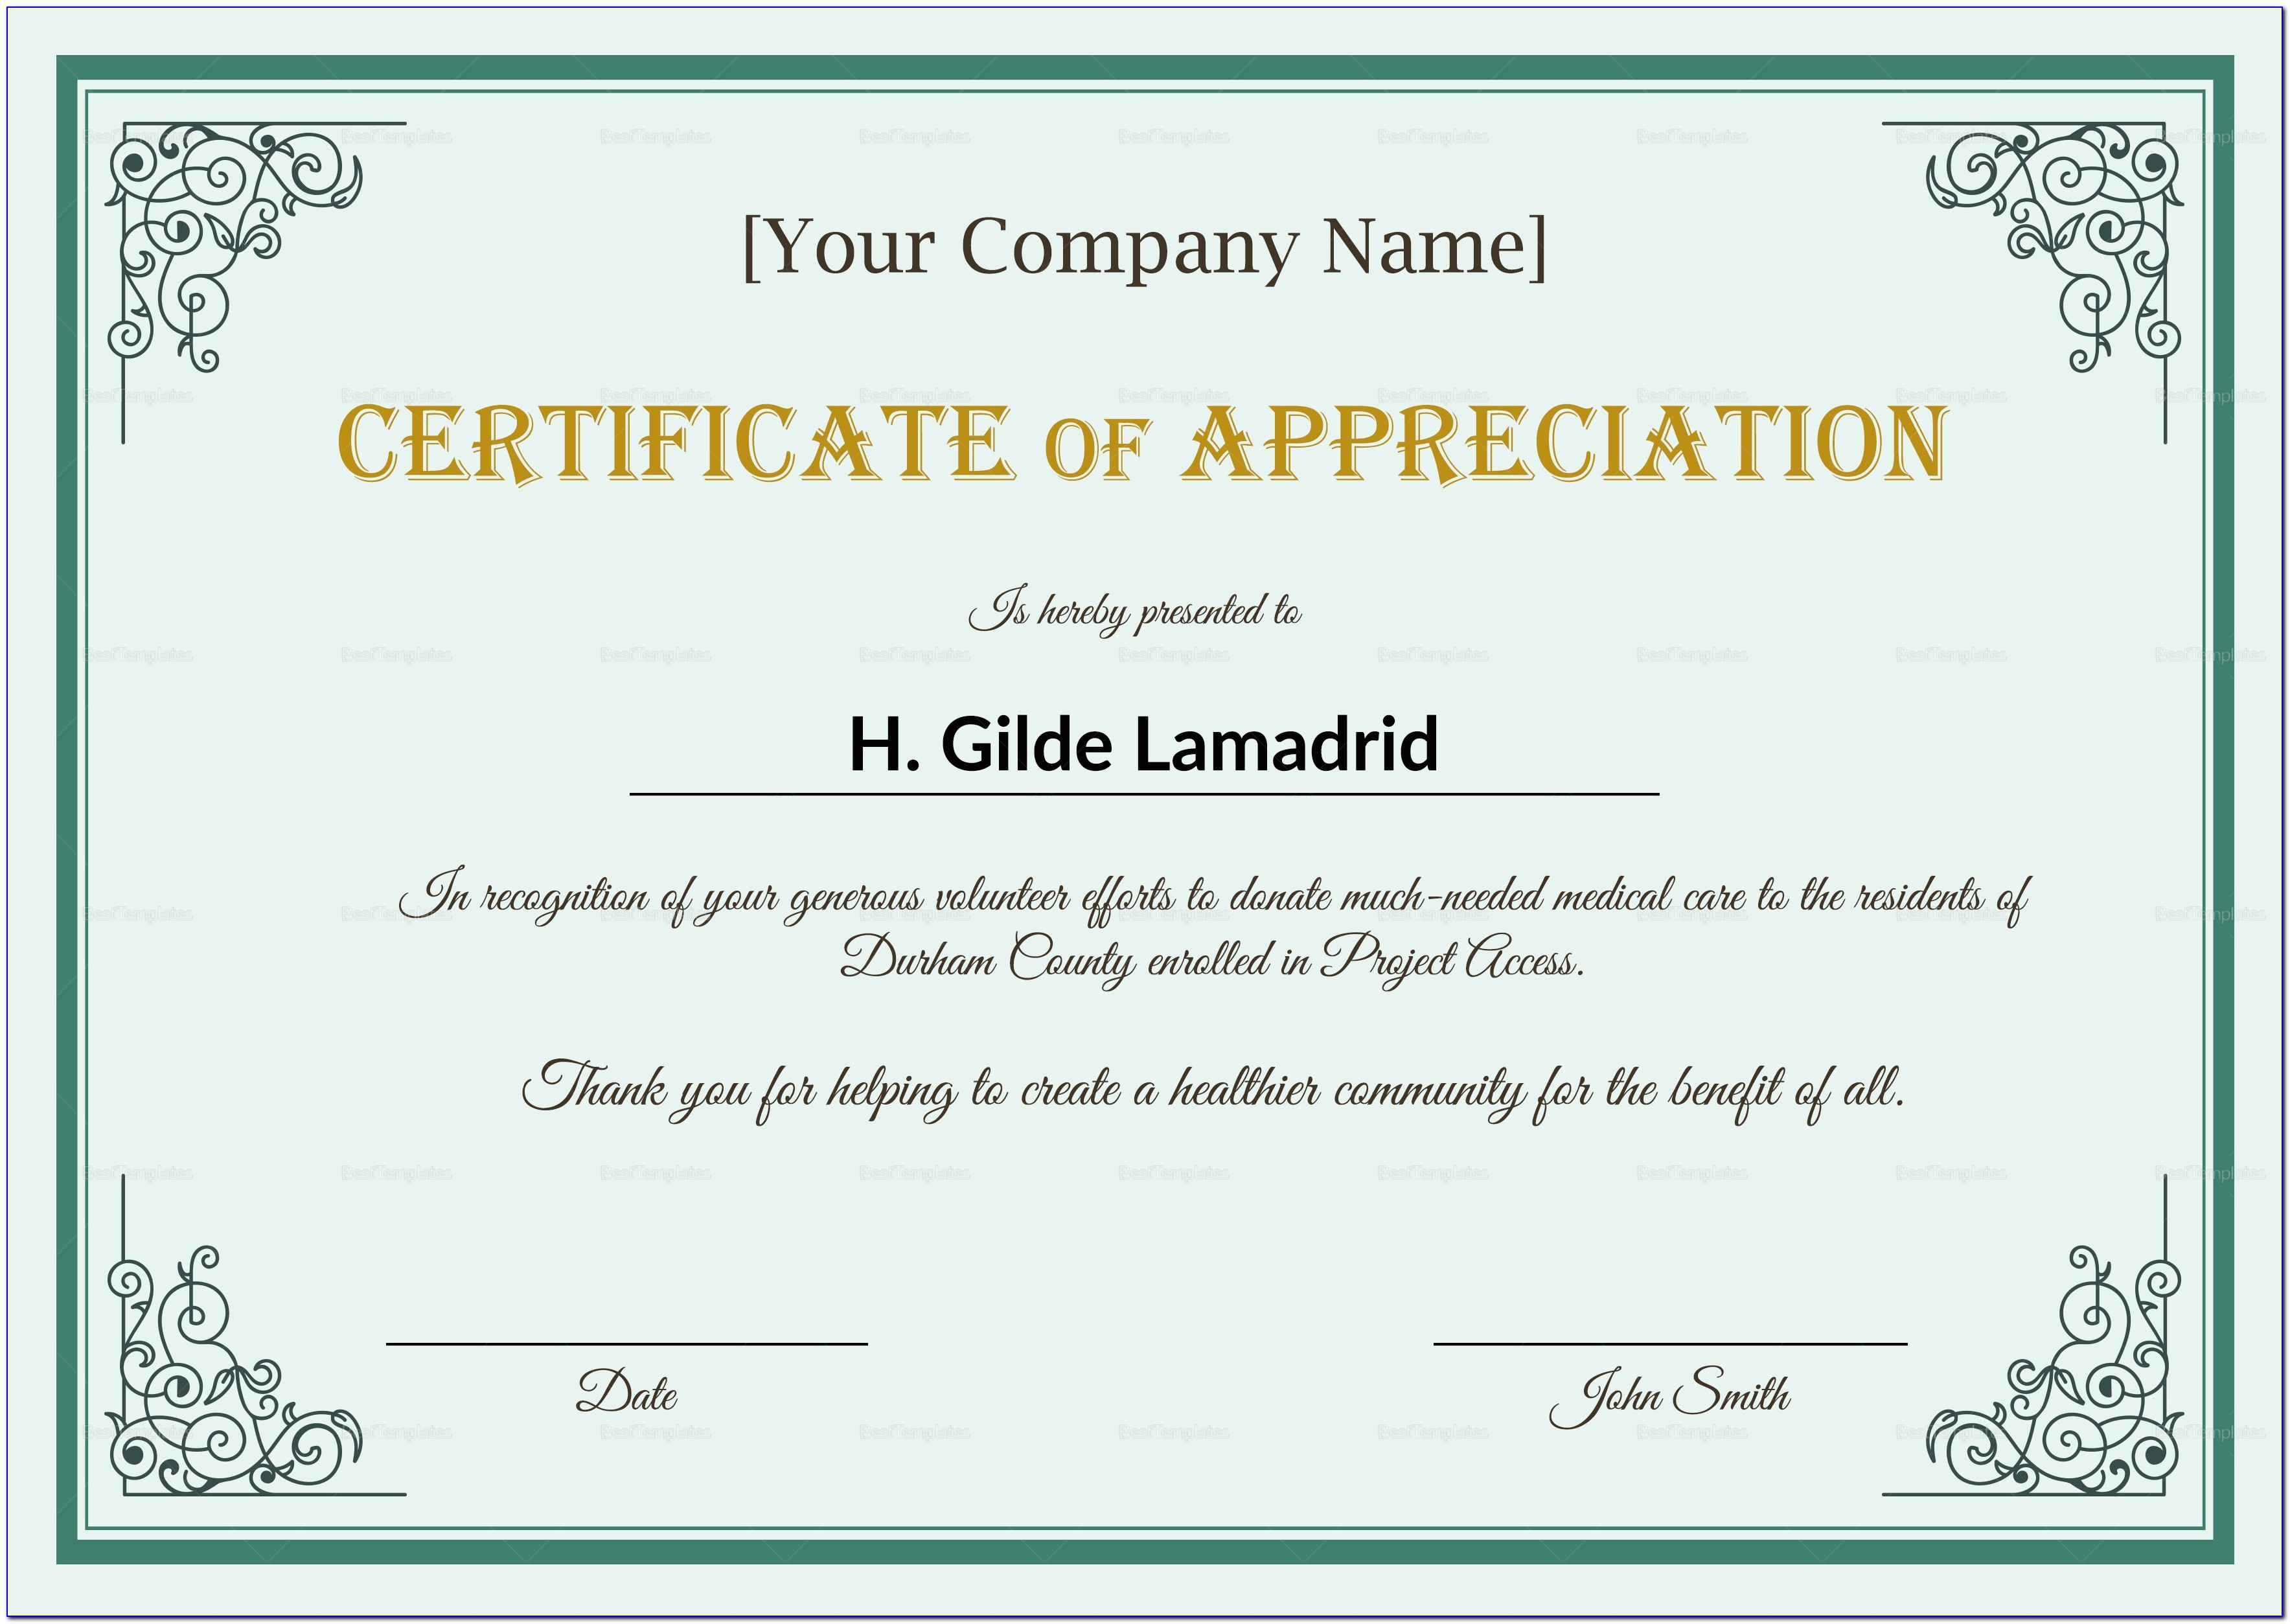 Appreciation Certificate Template For Employee Company Employee Appreciation Certificate Design Template